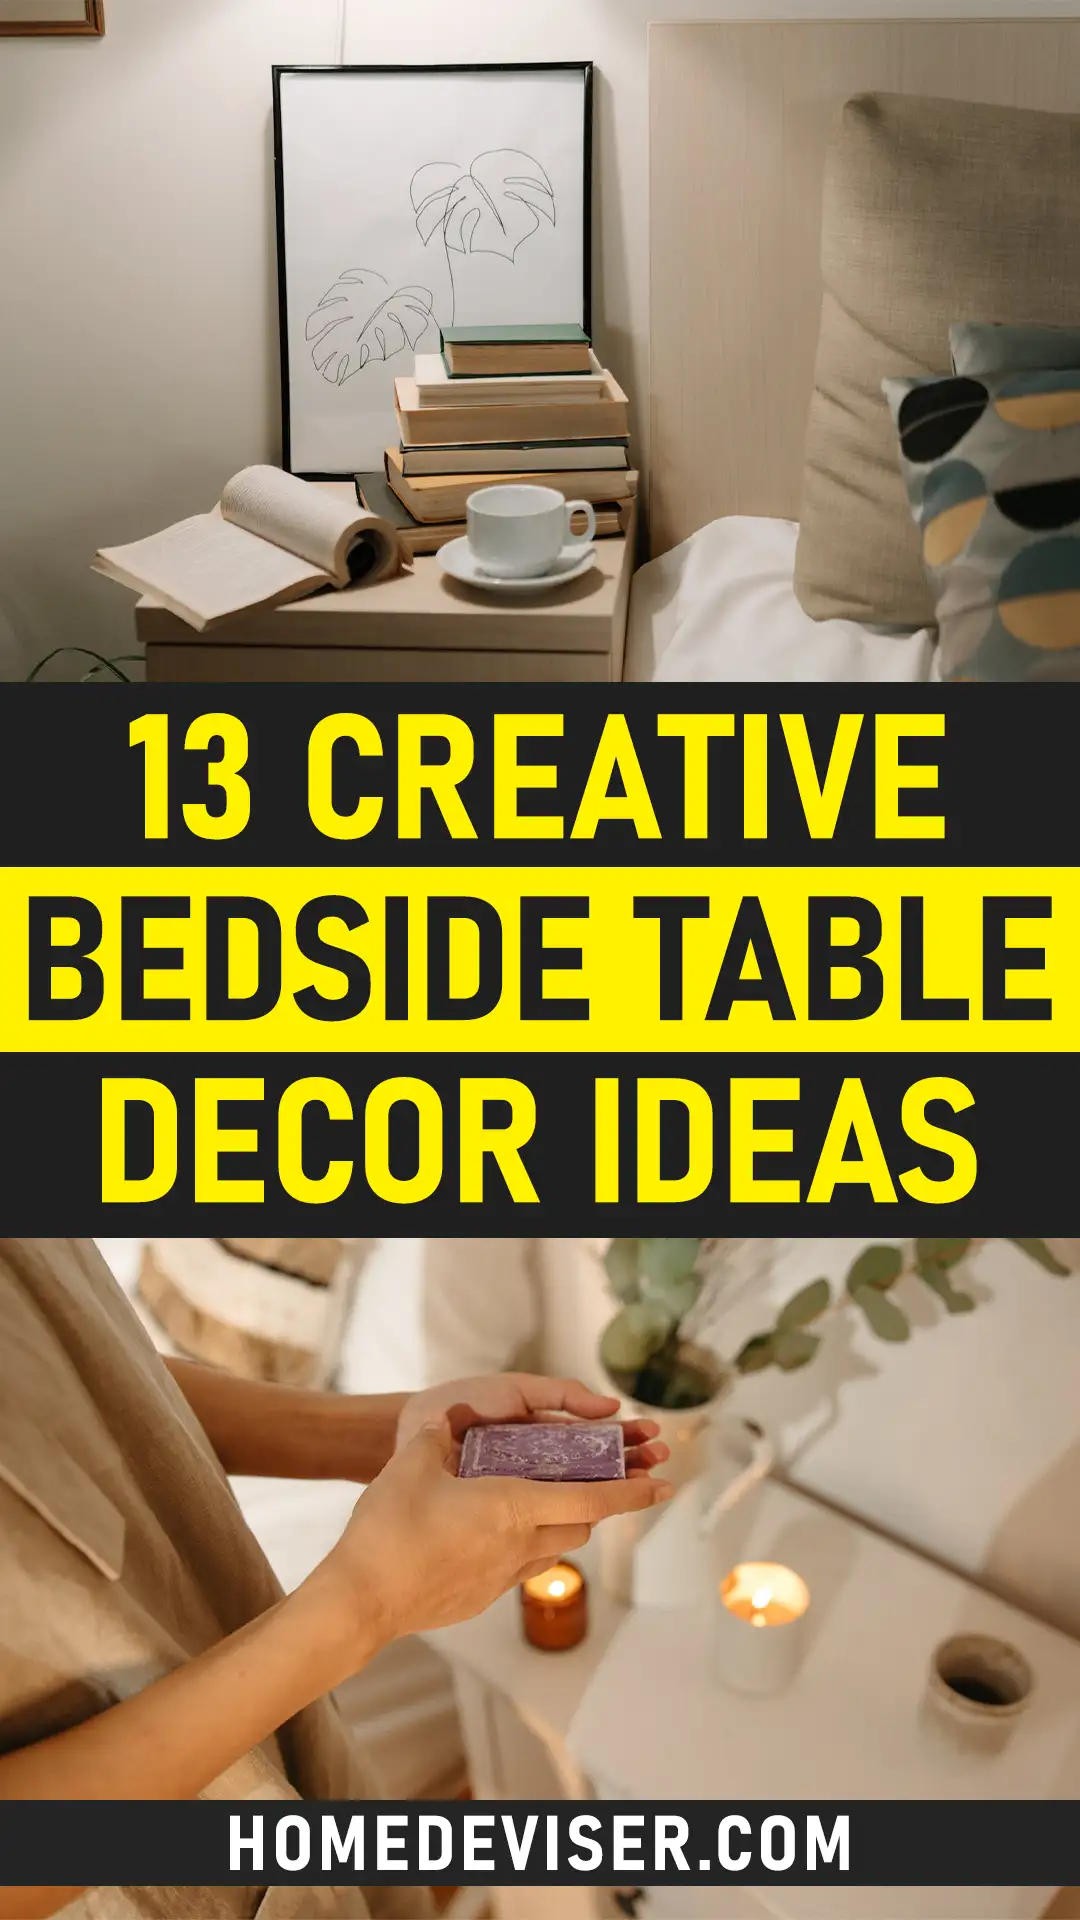 Bedside Table Decor Ideas